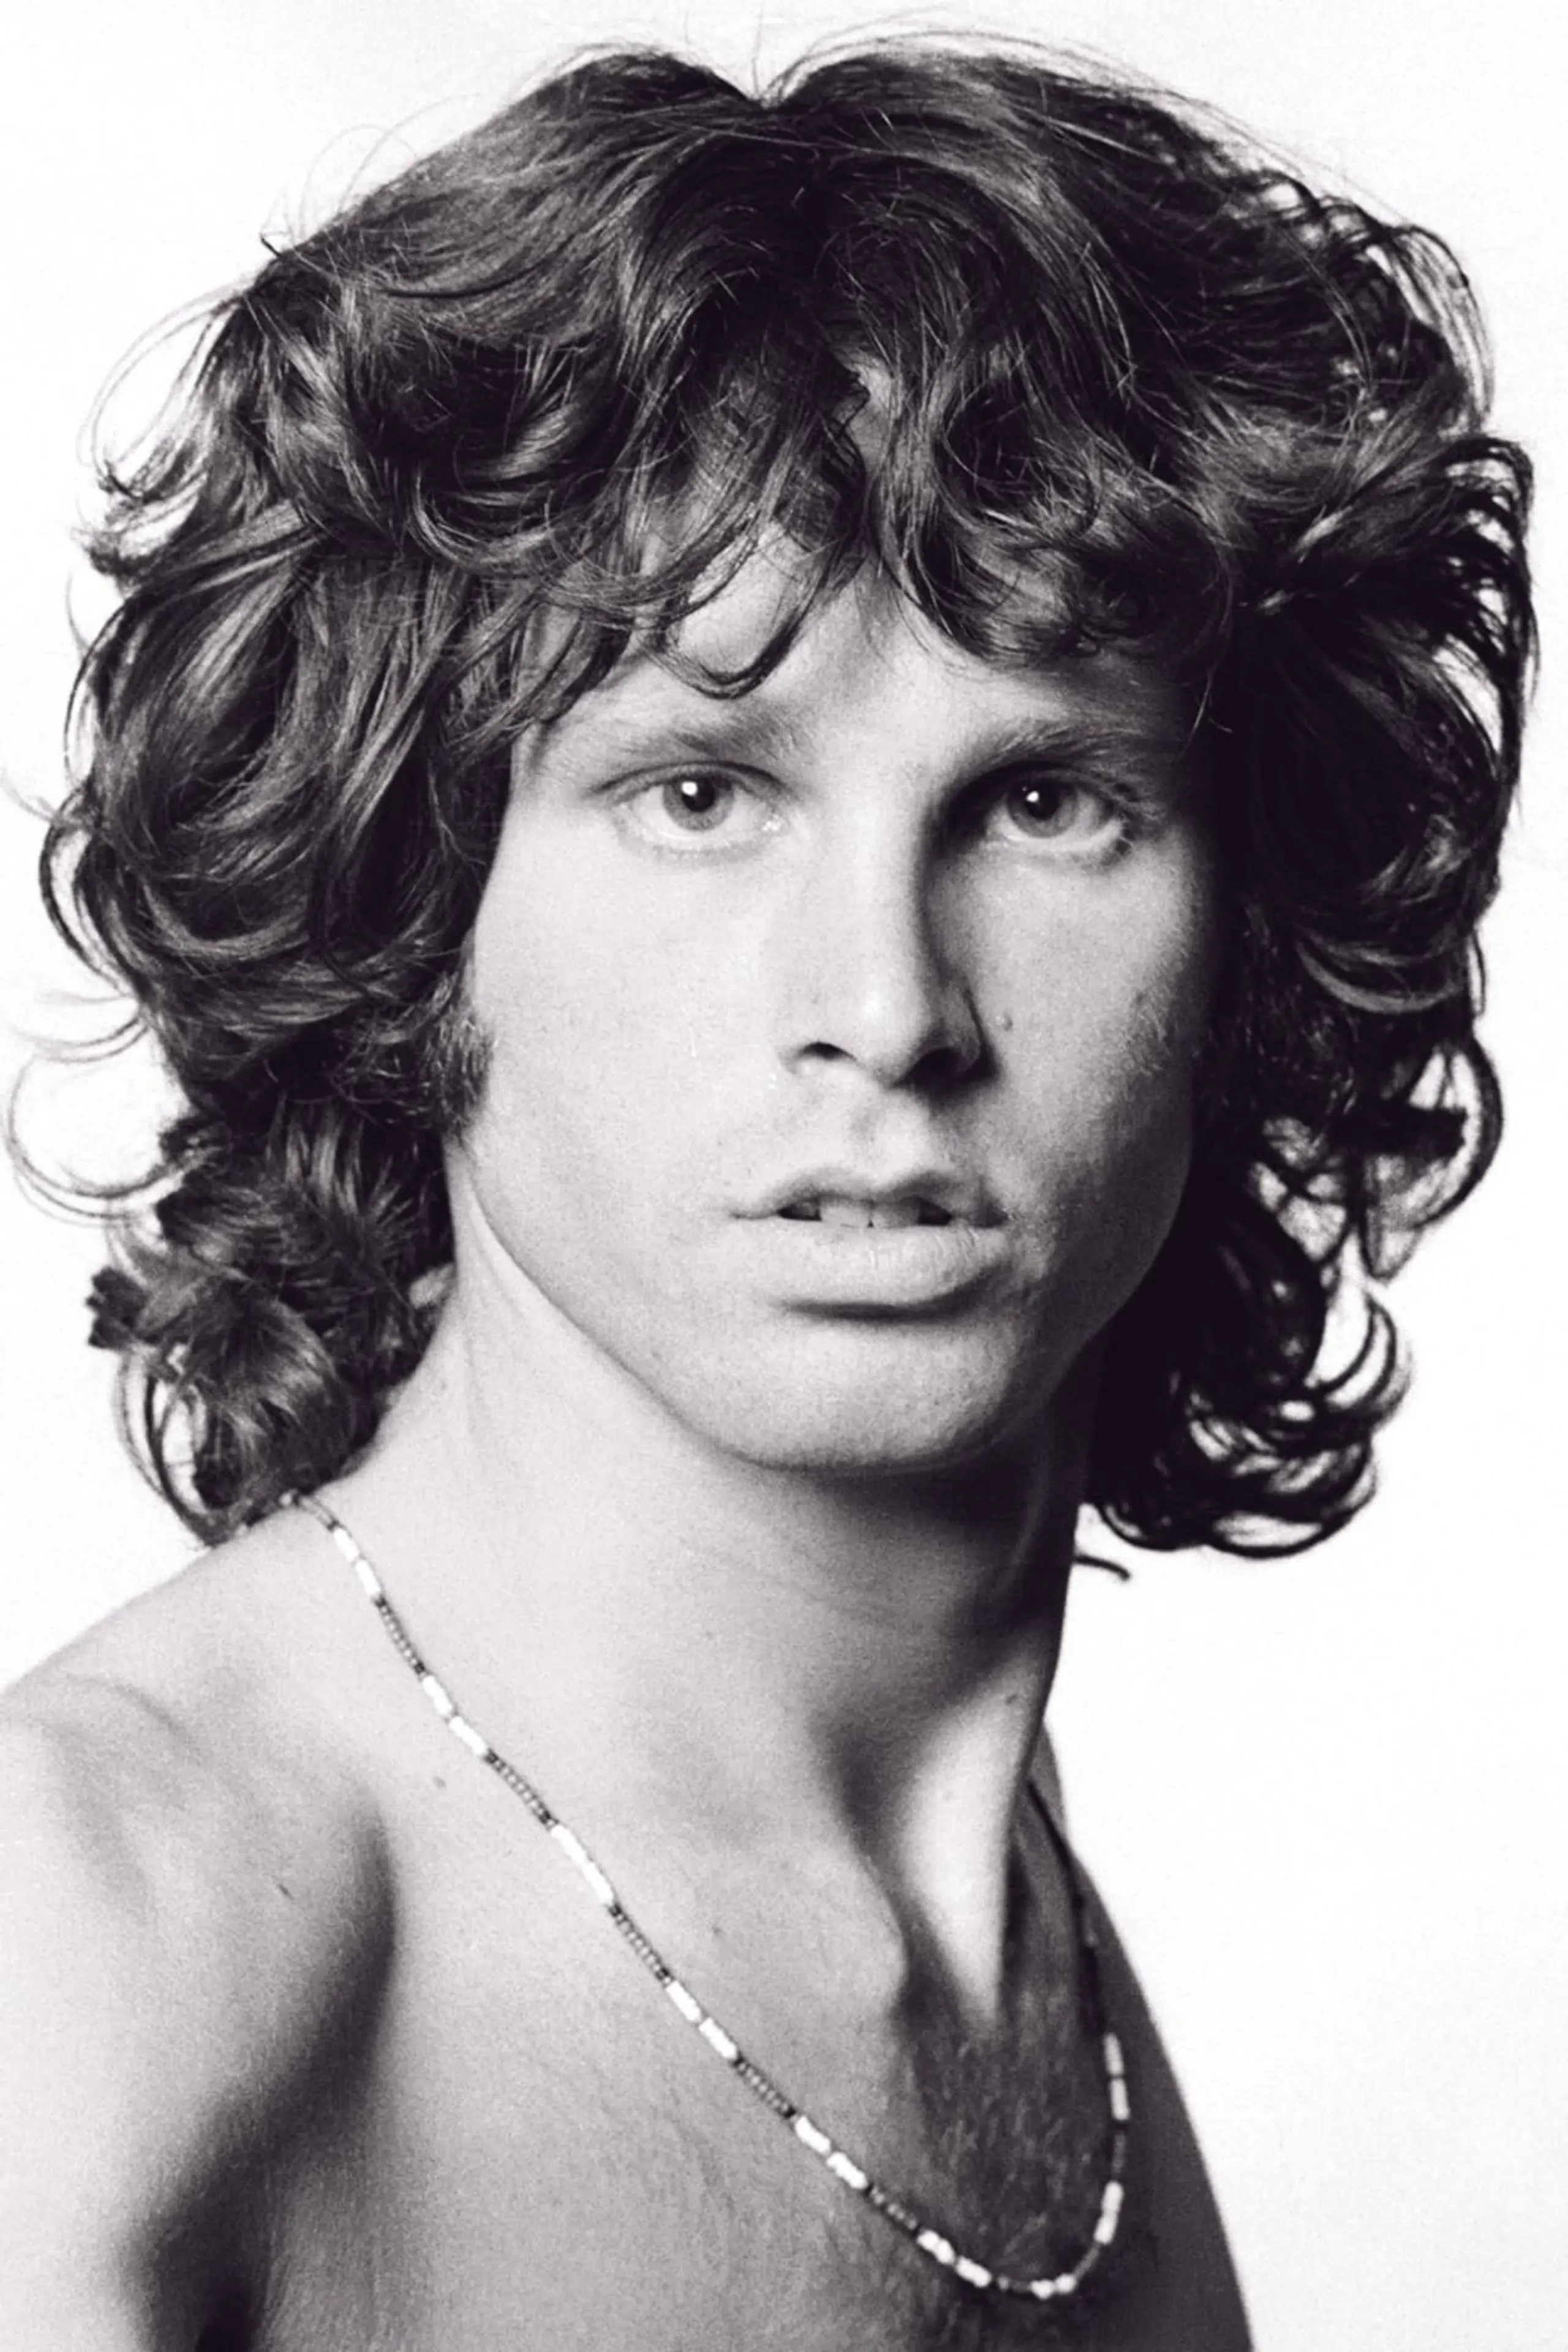 Foto von Jim Morrison